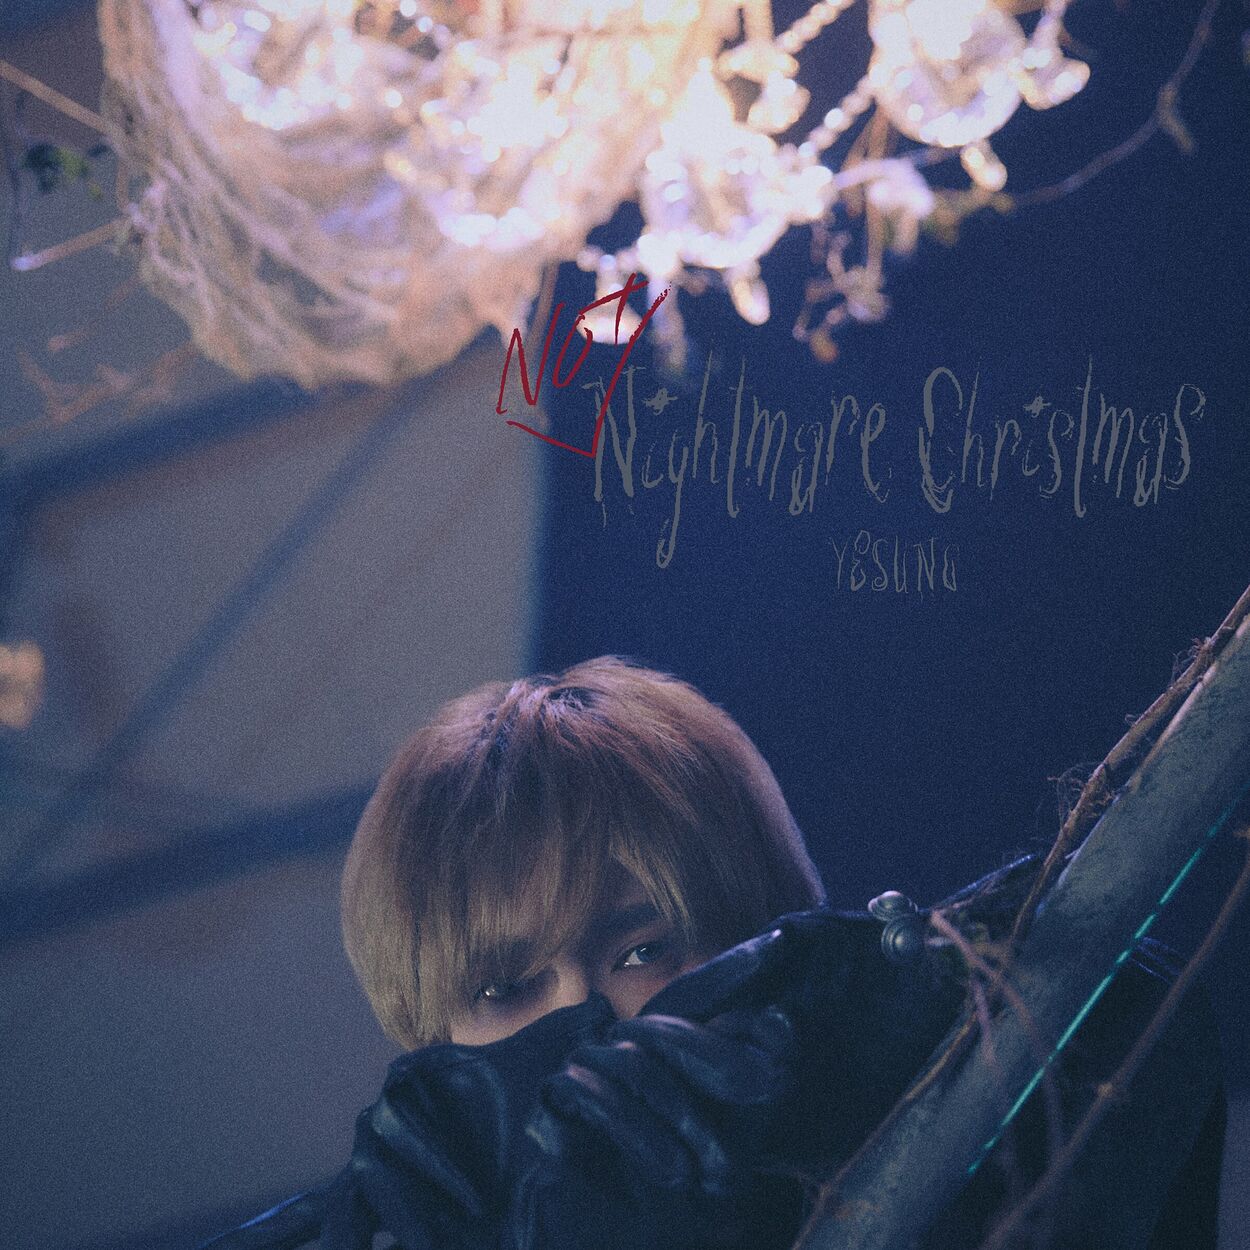 YESUNG – Not Nightmare Christmas – Single